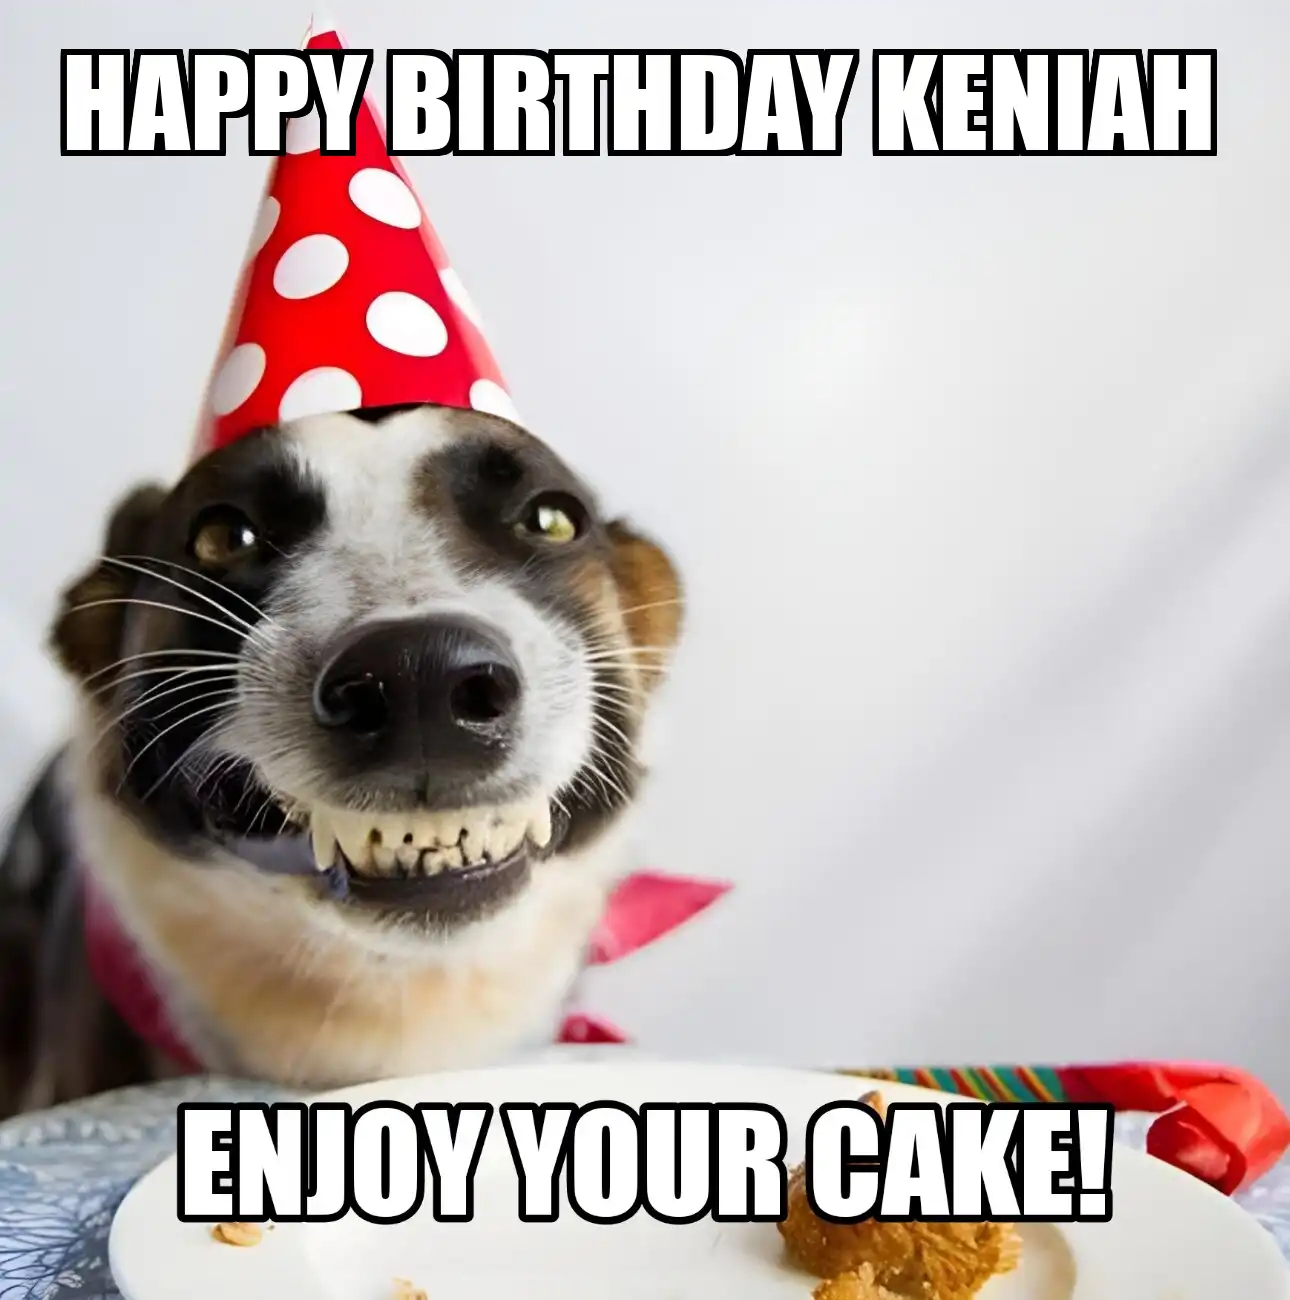 Happy Birthday Keniah Enjoy Your Cake Dog Meme